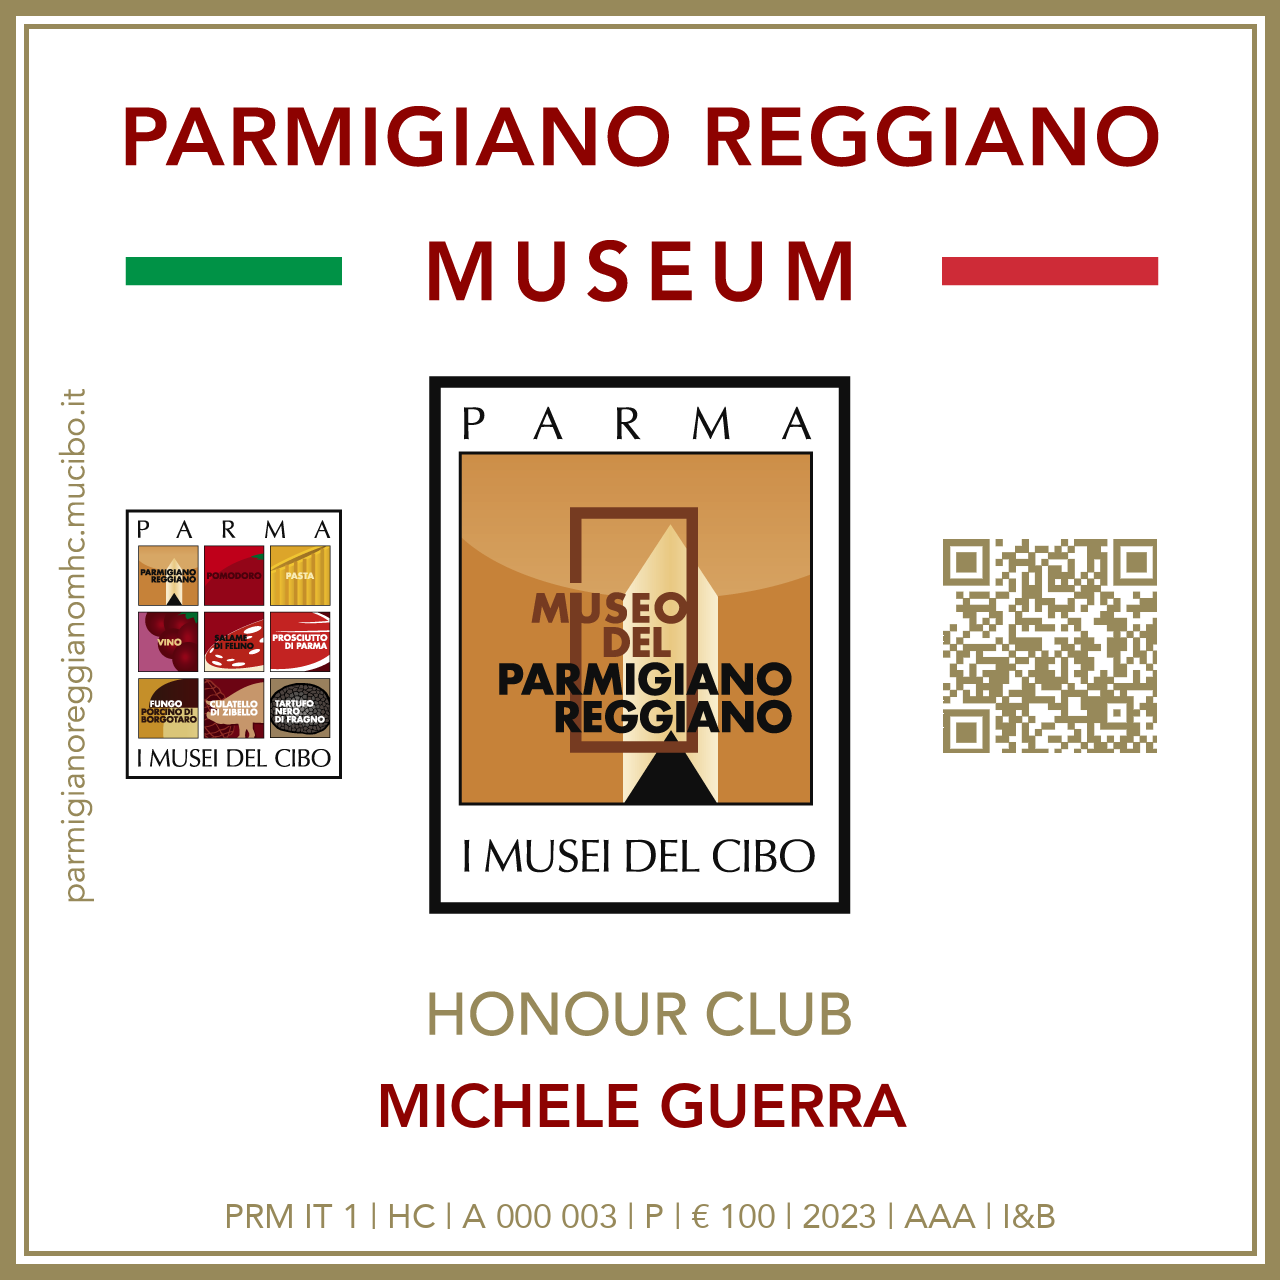 Parmigiano Reggiano Museum Honour Club - Token Id A 000 003 - MICHELE GUERRA